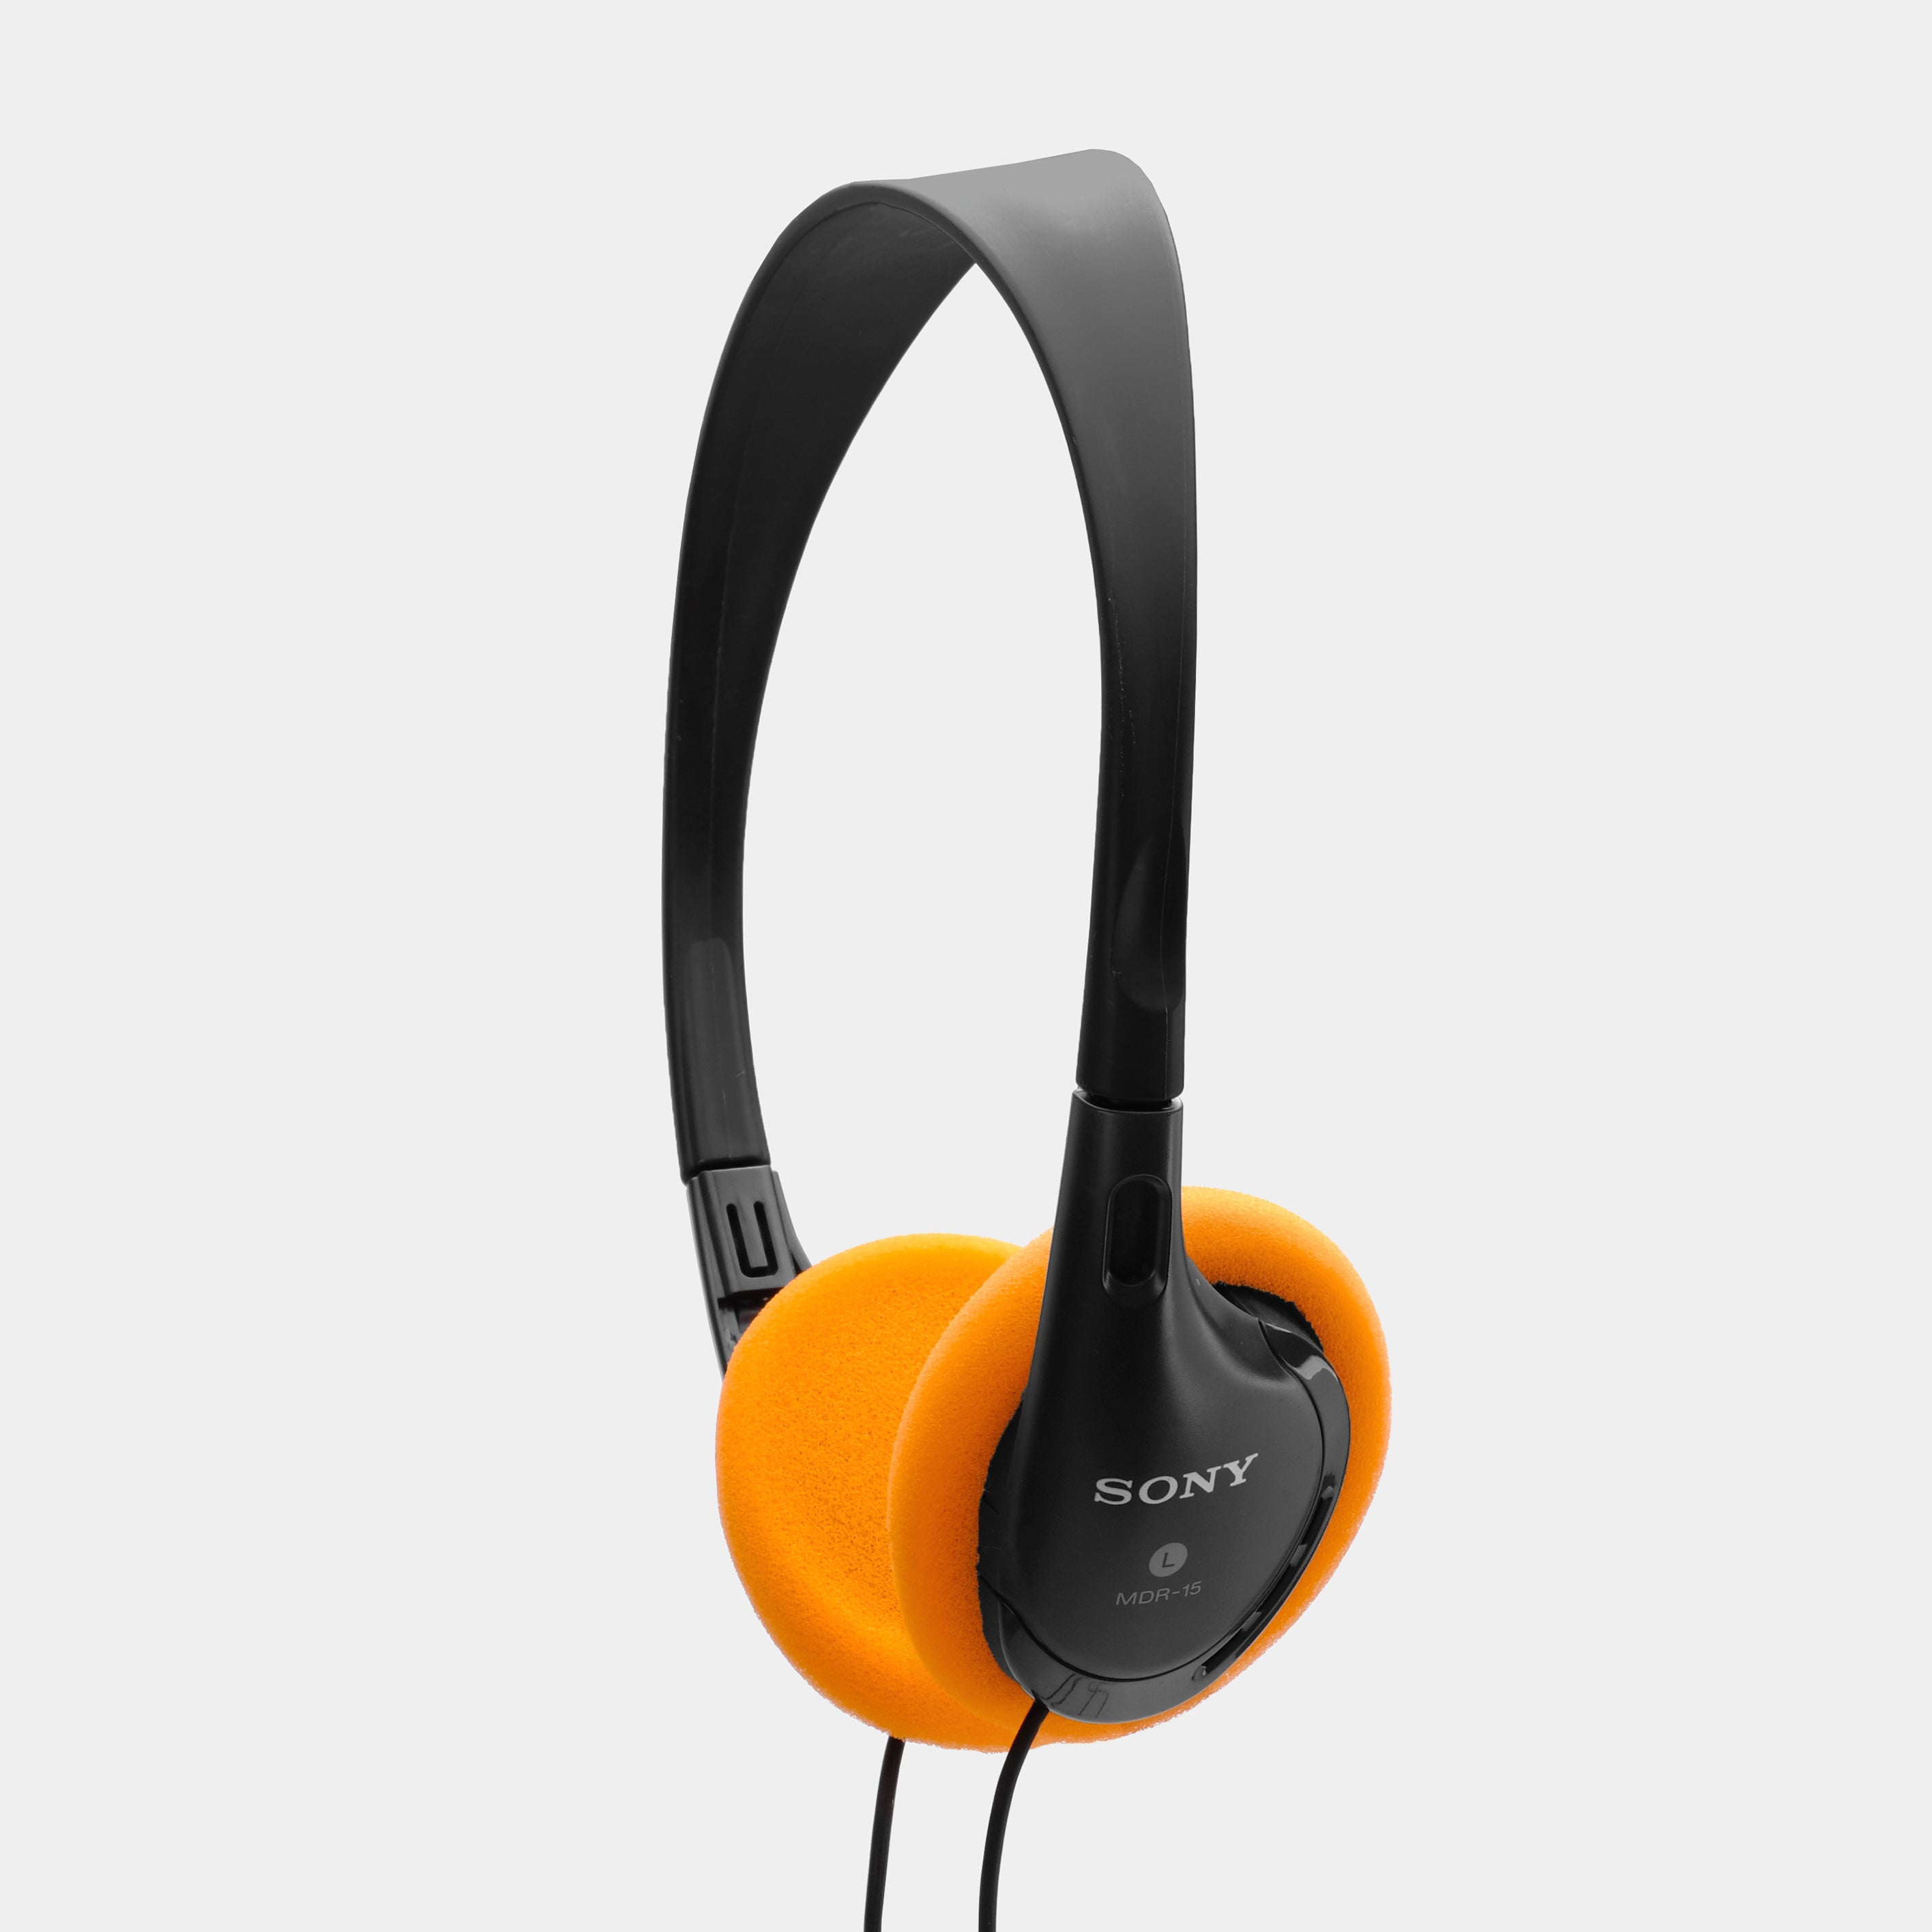 Sony MDR-15 On-Ear Headphones